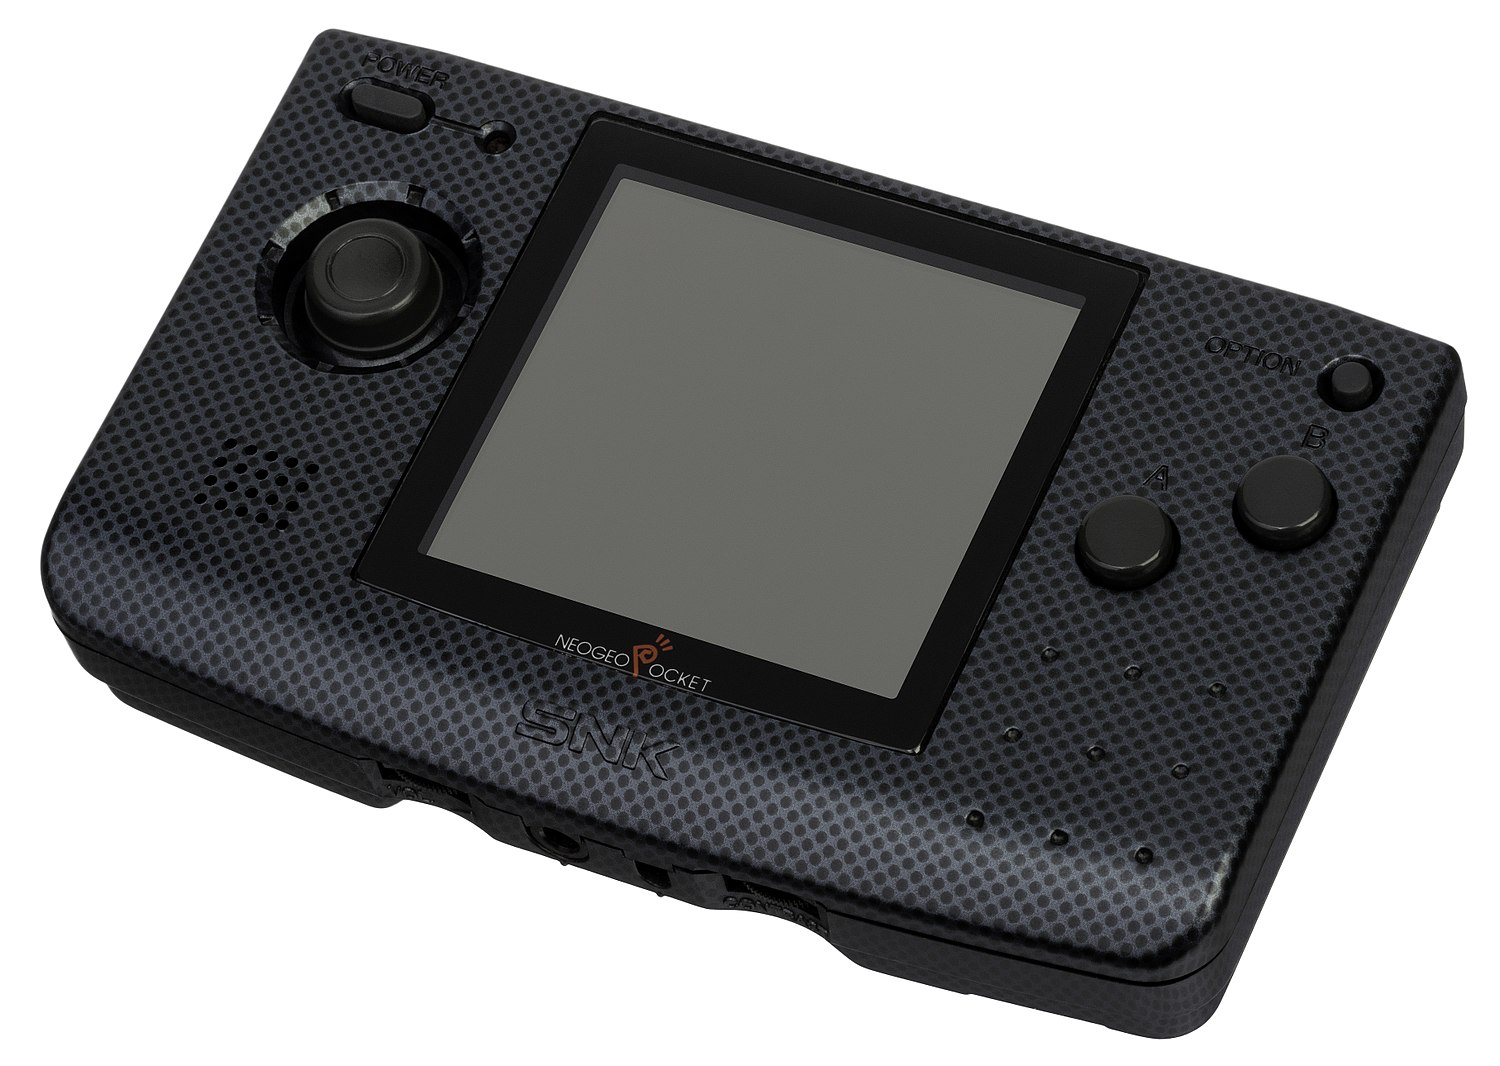 List of Neo Geo games - Wikipedia